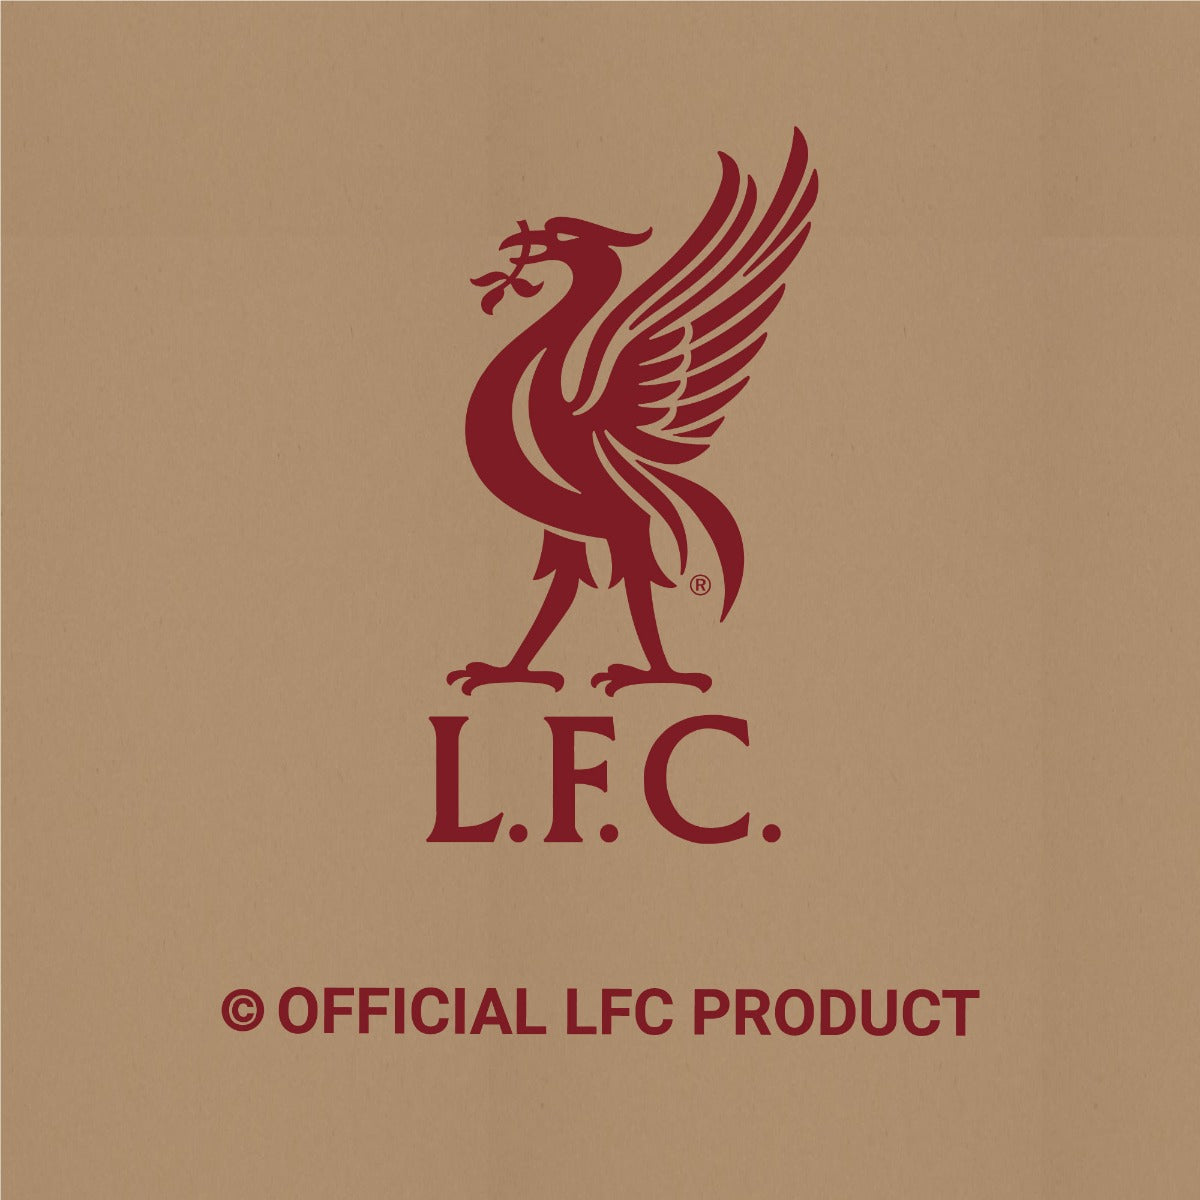 Liverpool FC Print - Anfield Illustration Outside Stadium Blue Sky Poster